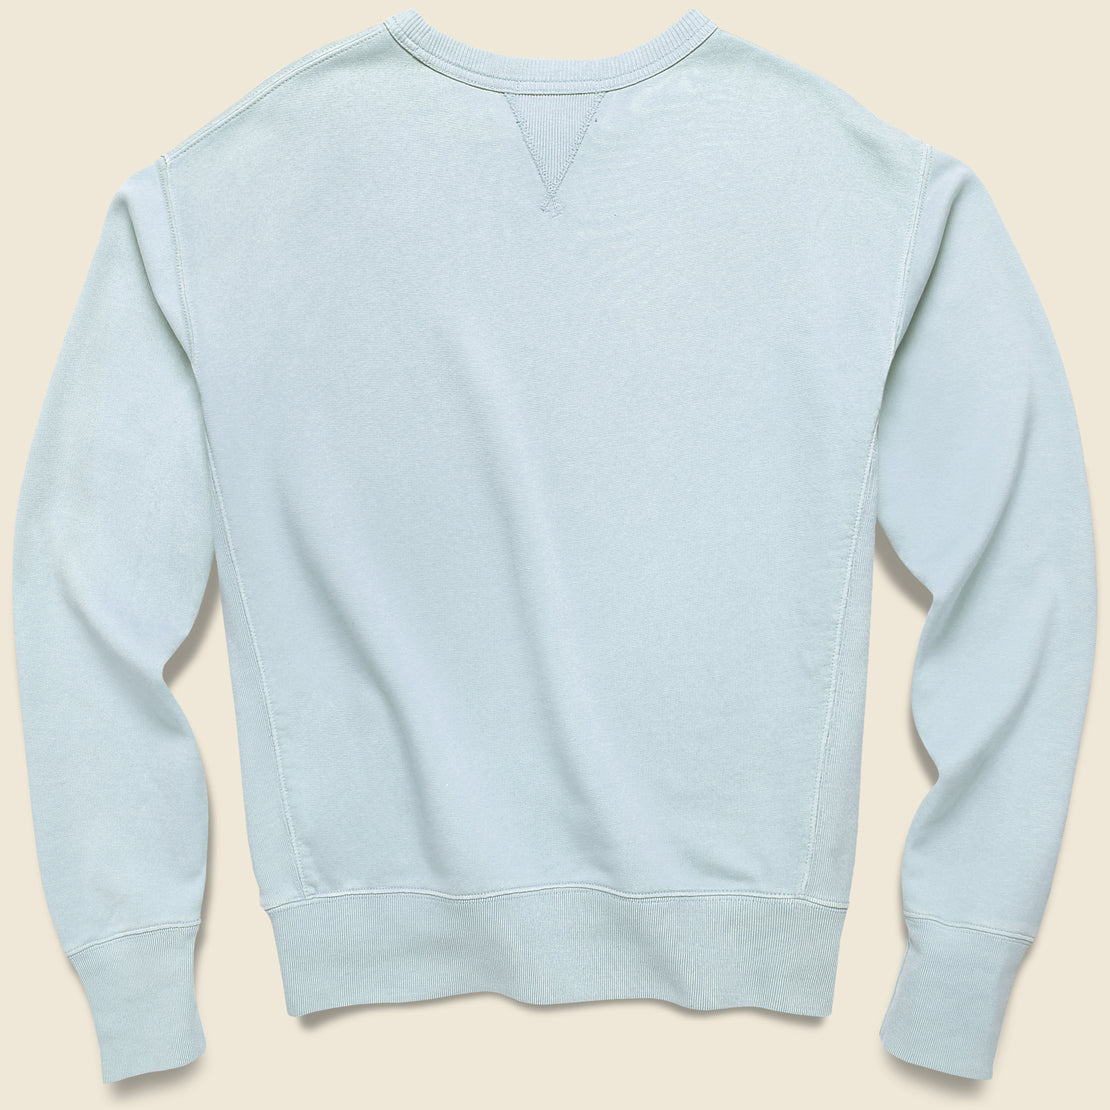 French Terry Graphic Sweatshirt - Blue - RRL - STAG Provisions - Tops - Fleece / Sweatshirt